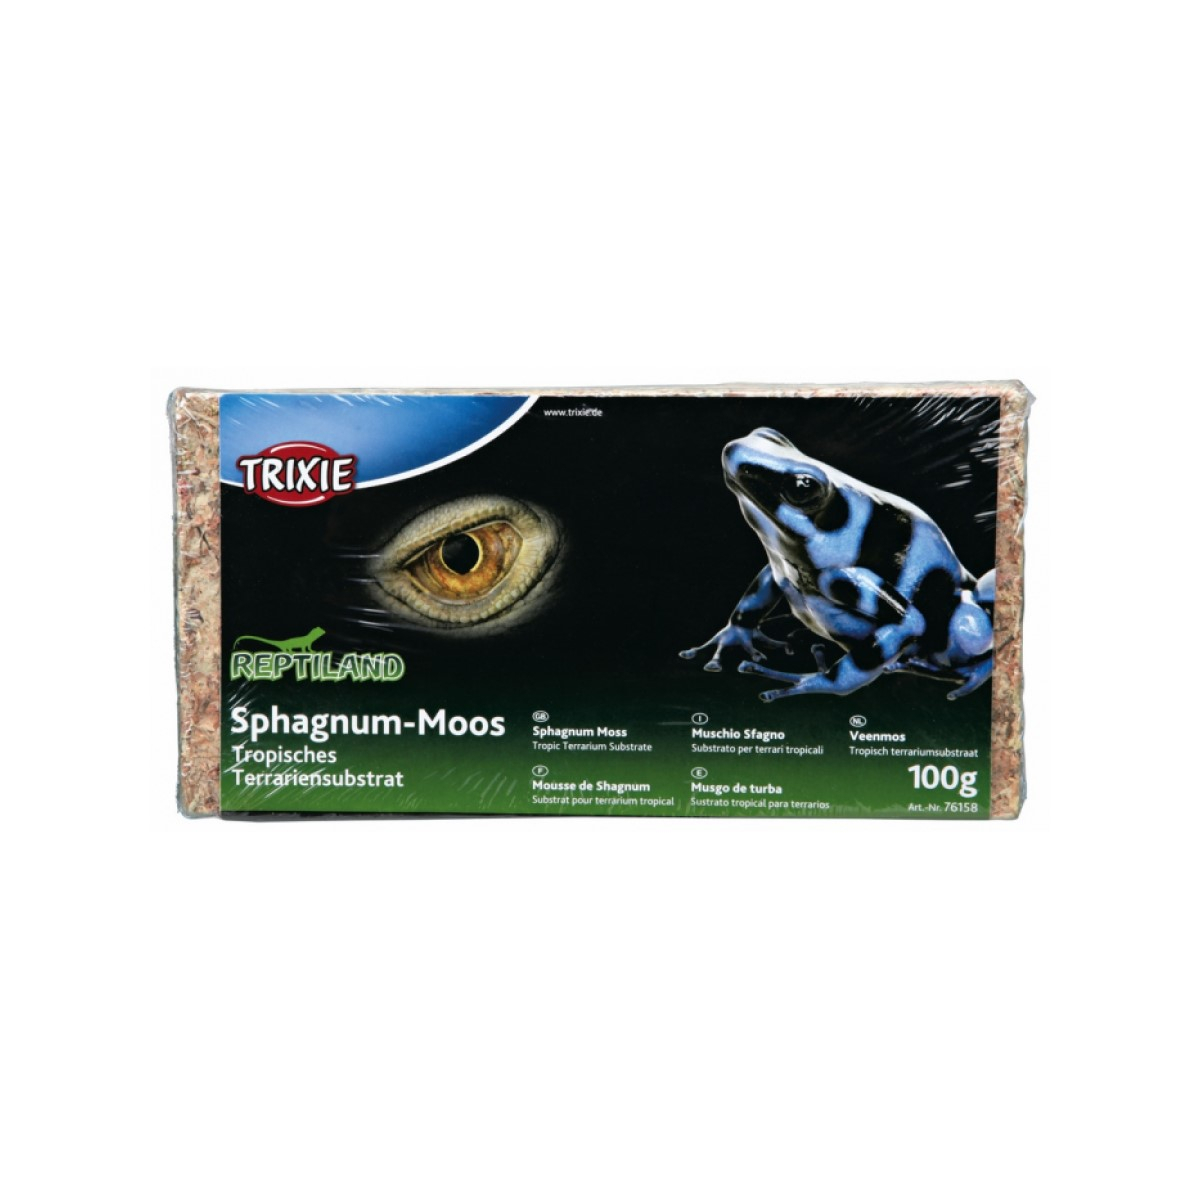 Sphagnum-Moos Trixie Reptiland